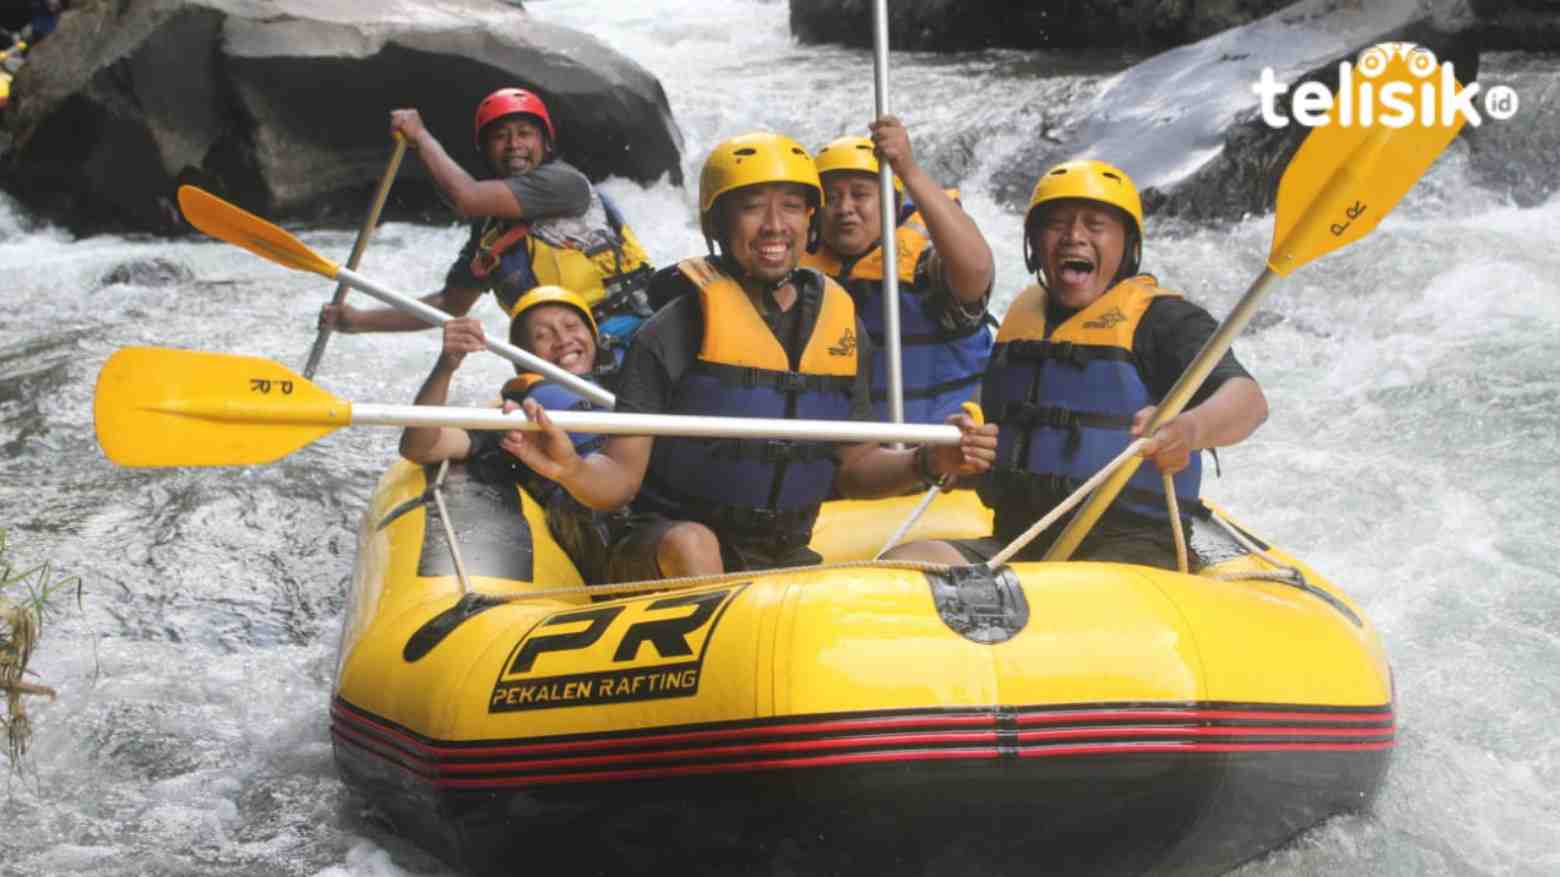 Menantang Uji Adrenalin, Wisata Arum Jeram Sungai Pekalen Probolinggo Banjir Pengunjung